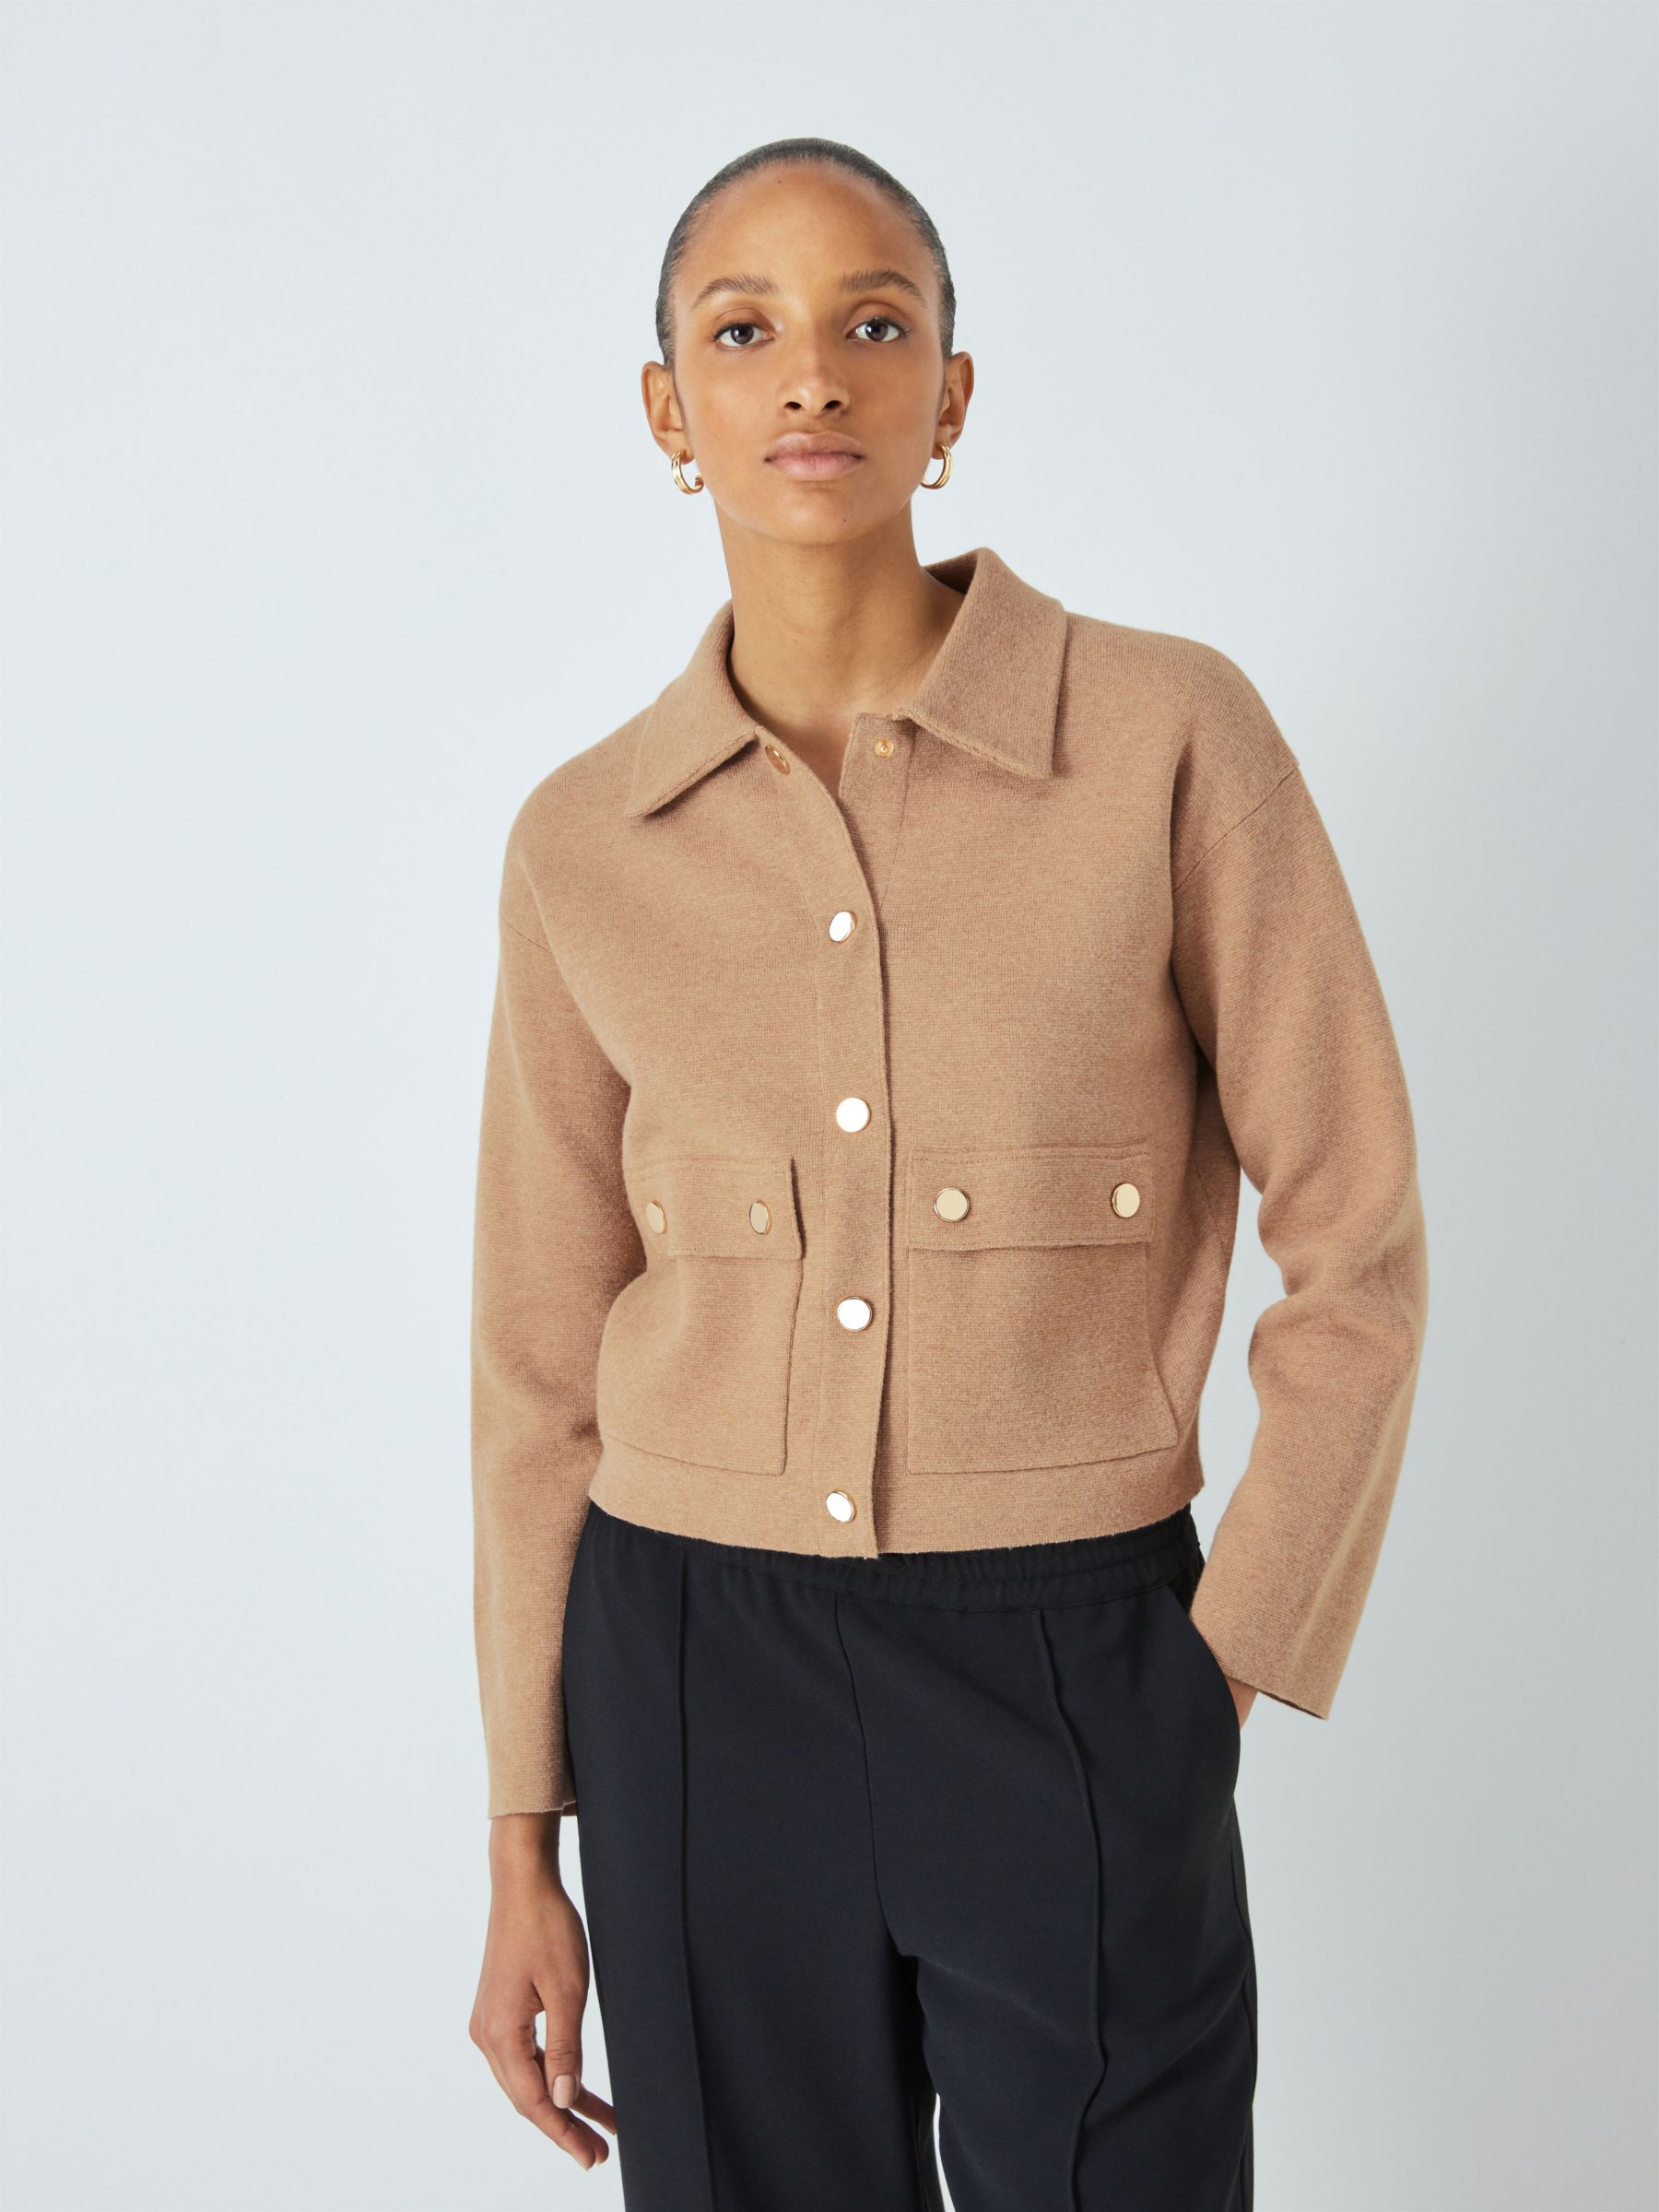 Women's Coats, Women's Jackets